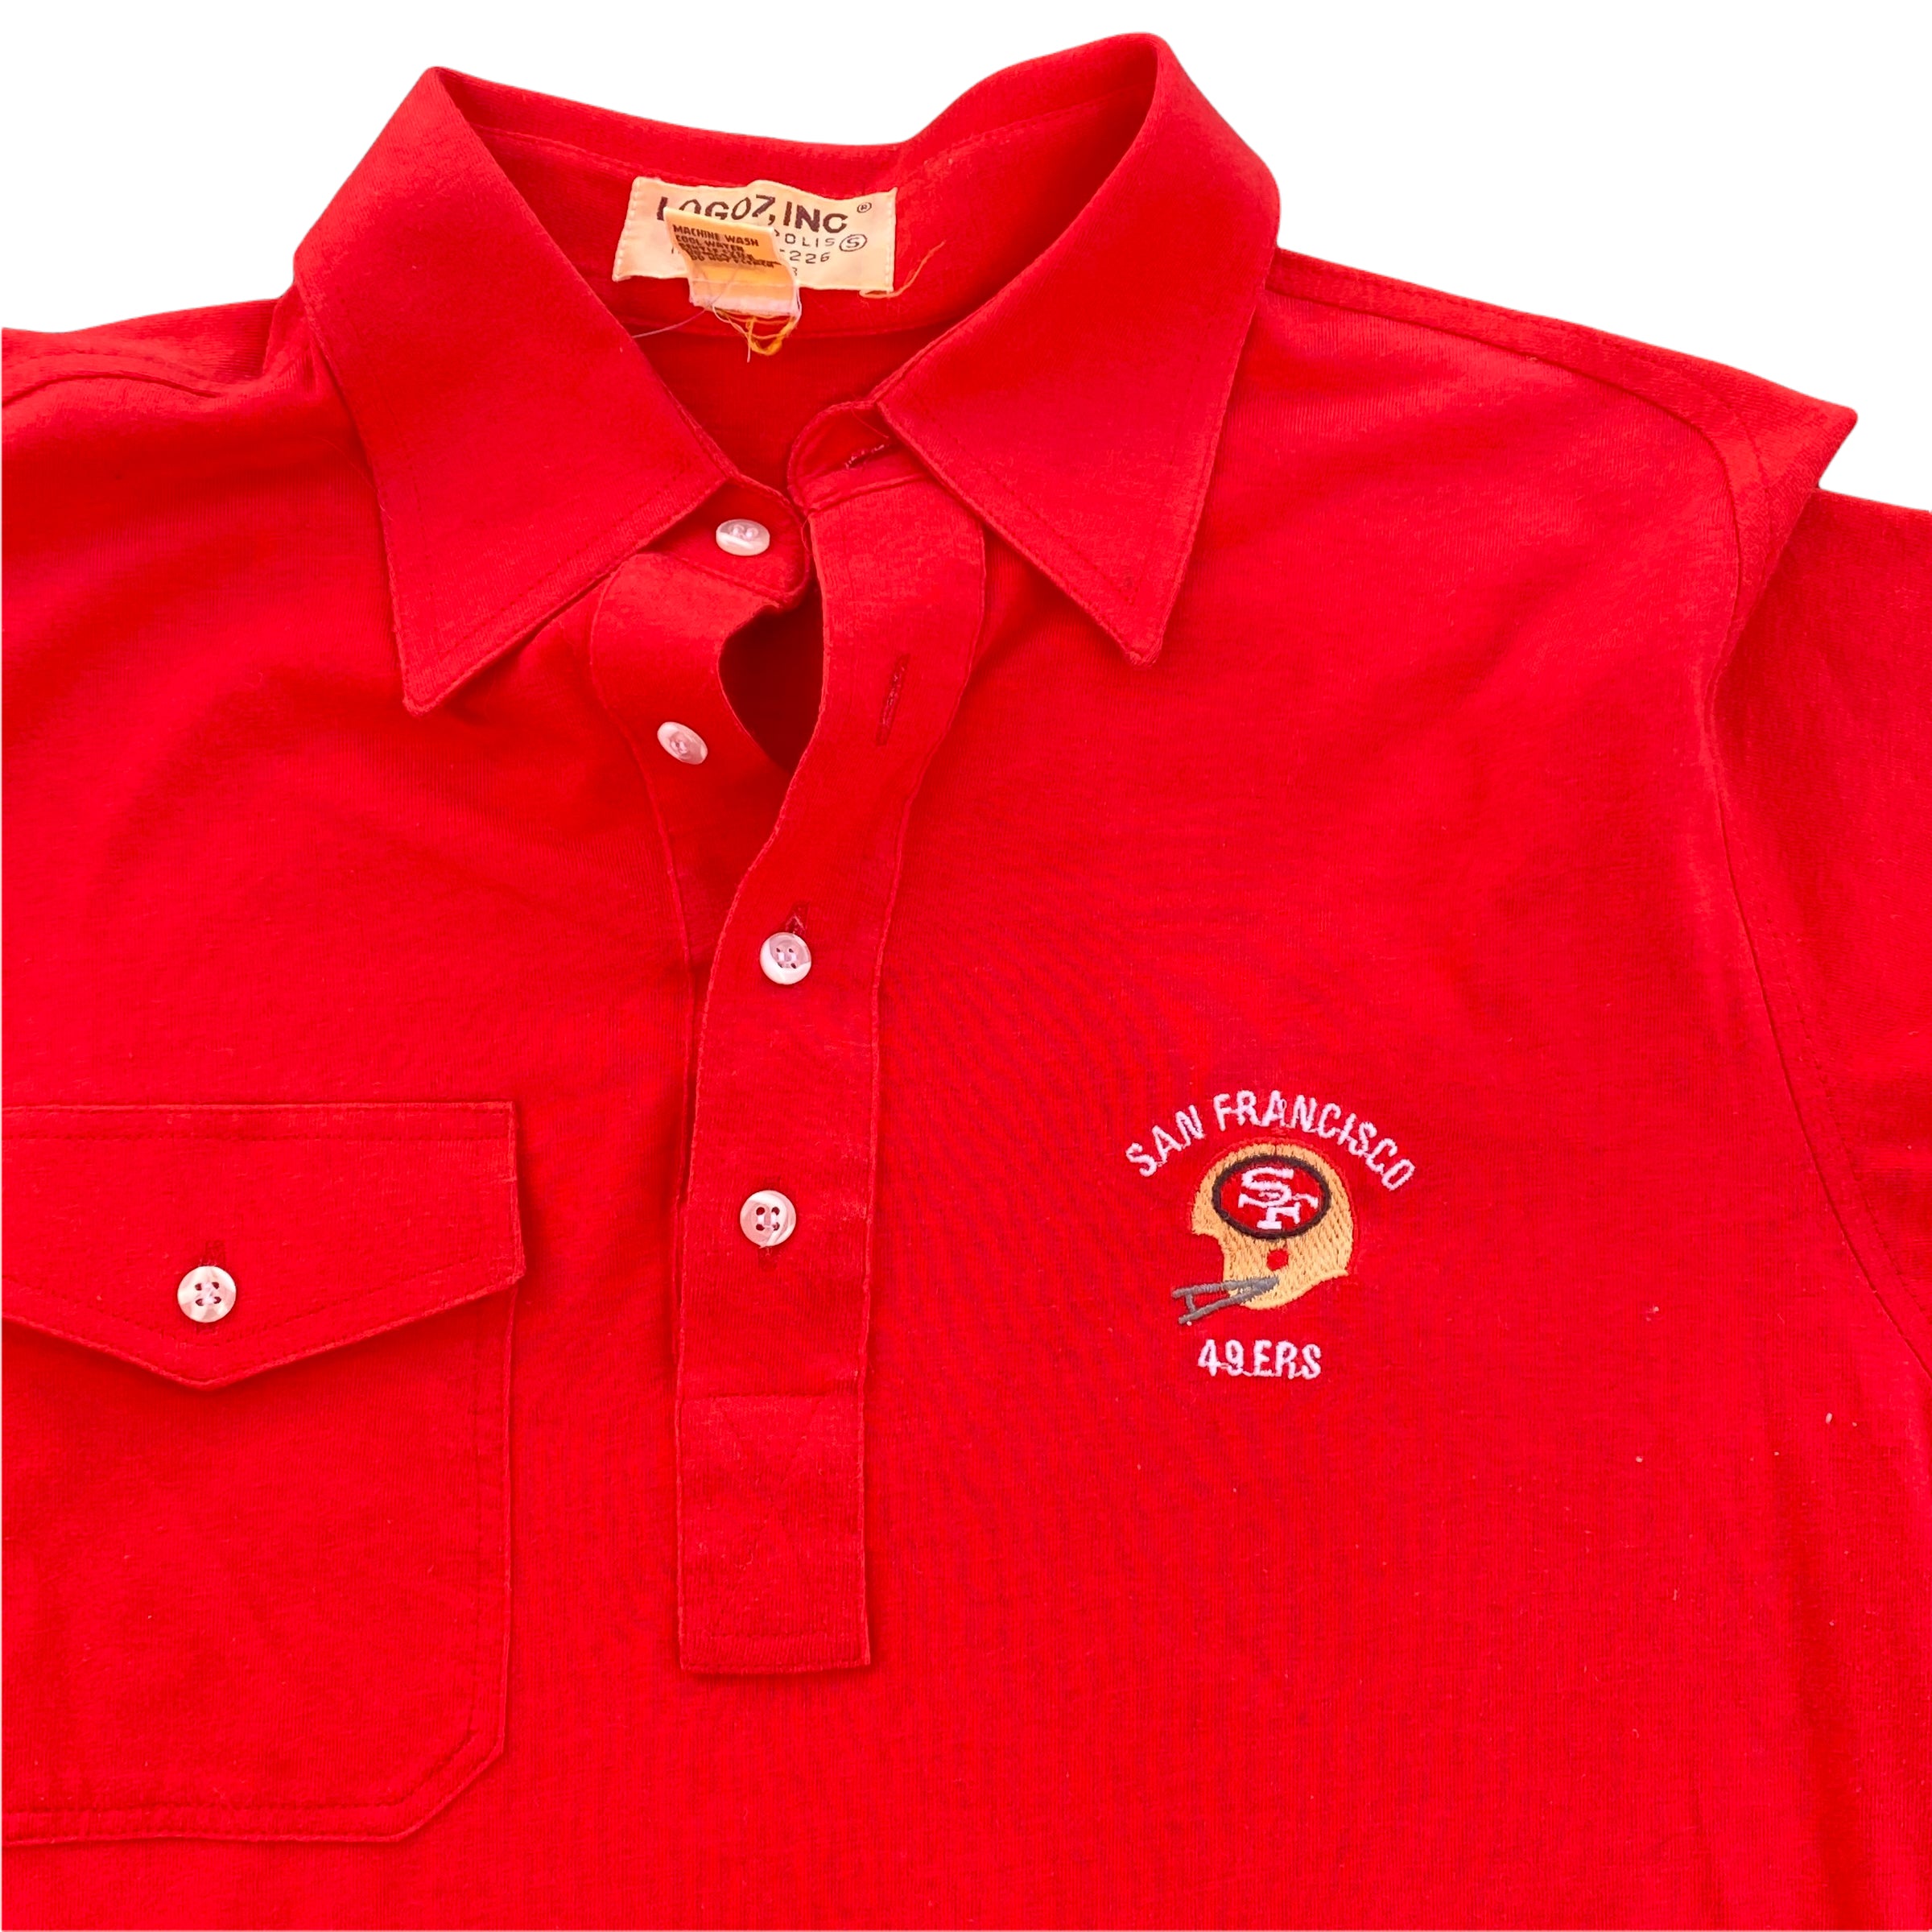 Vintage 1990 Logo 7 SAN FRANCISCO GIANTS Baseball Club (LG) T-Shirt